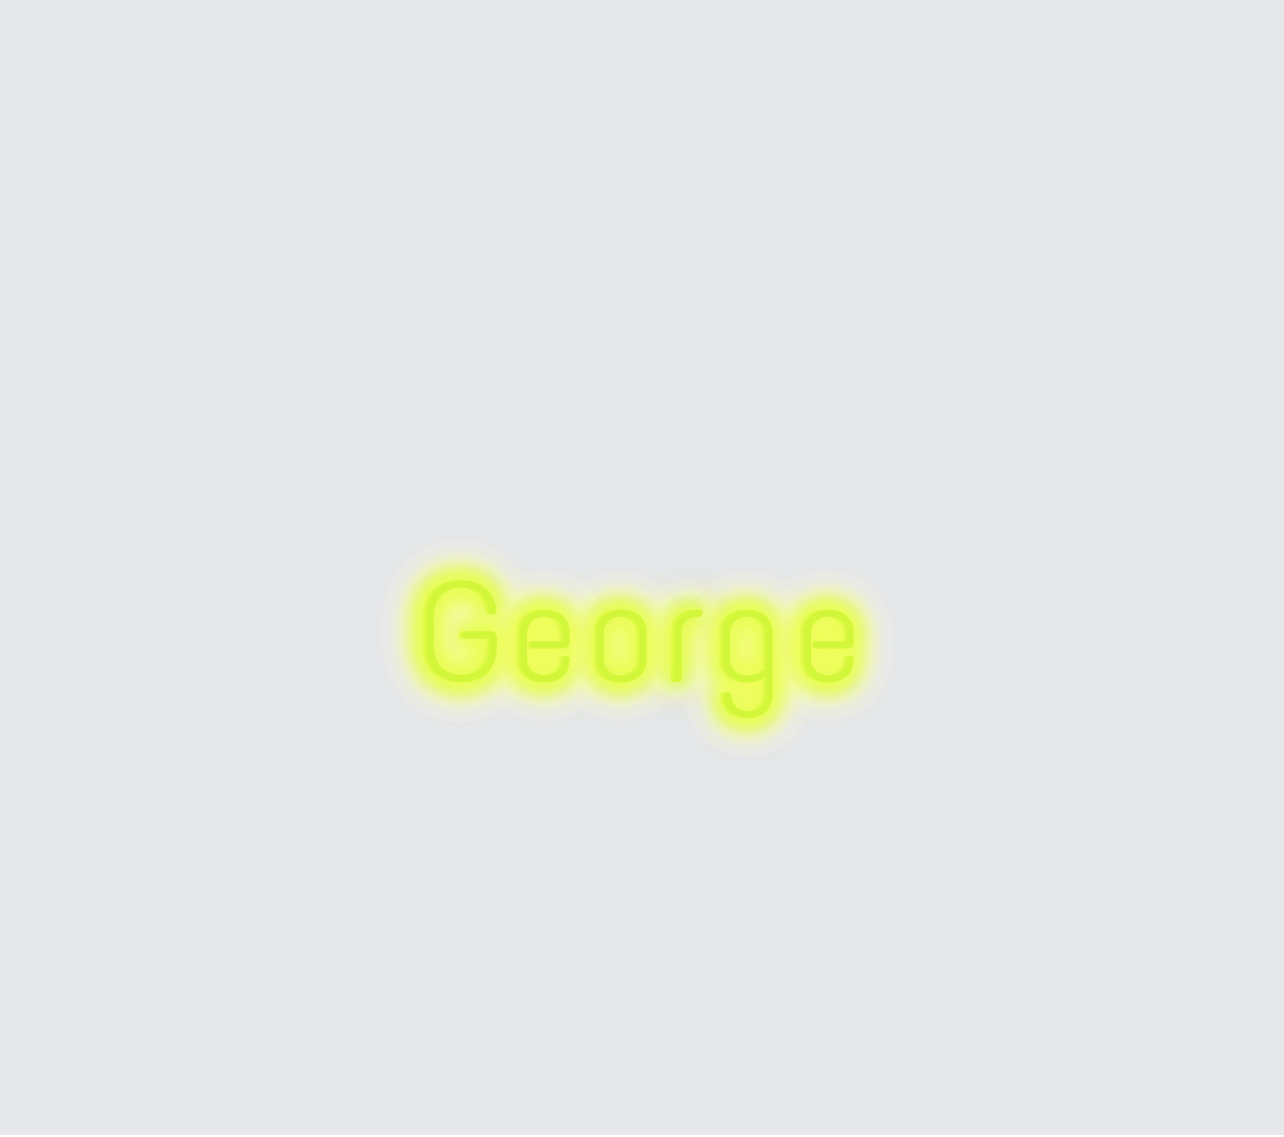 Custom neon sign - George